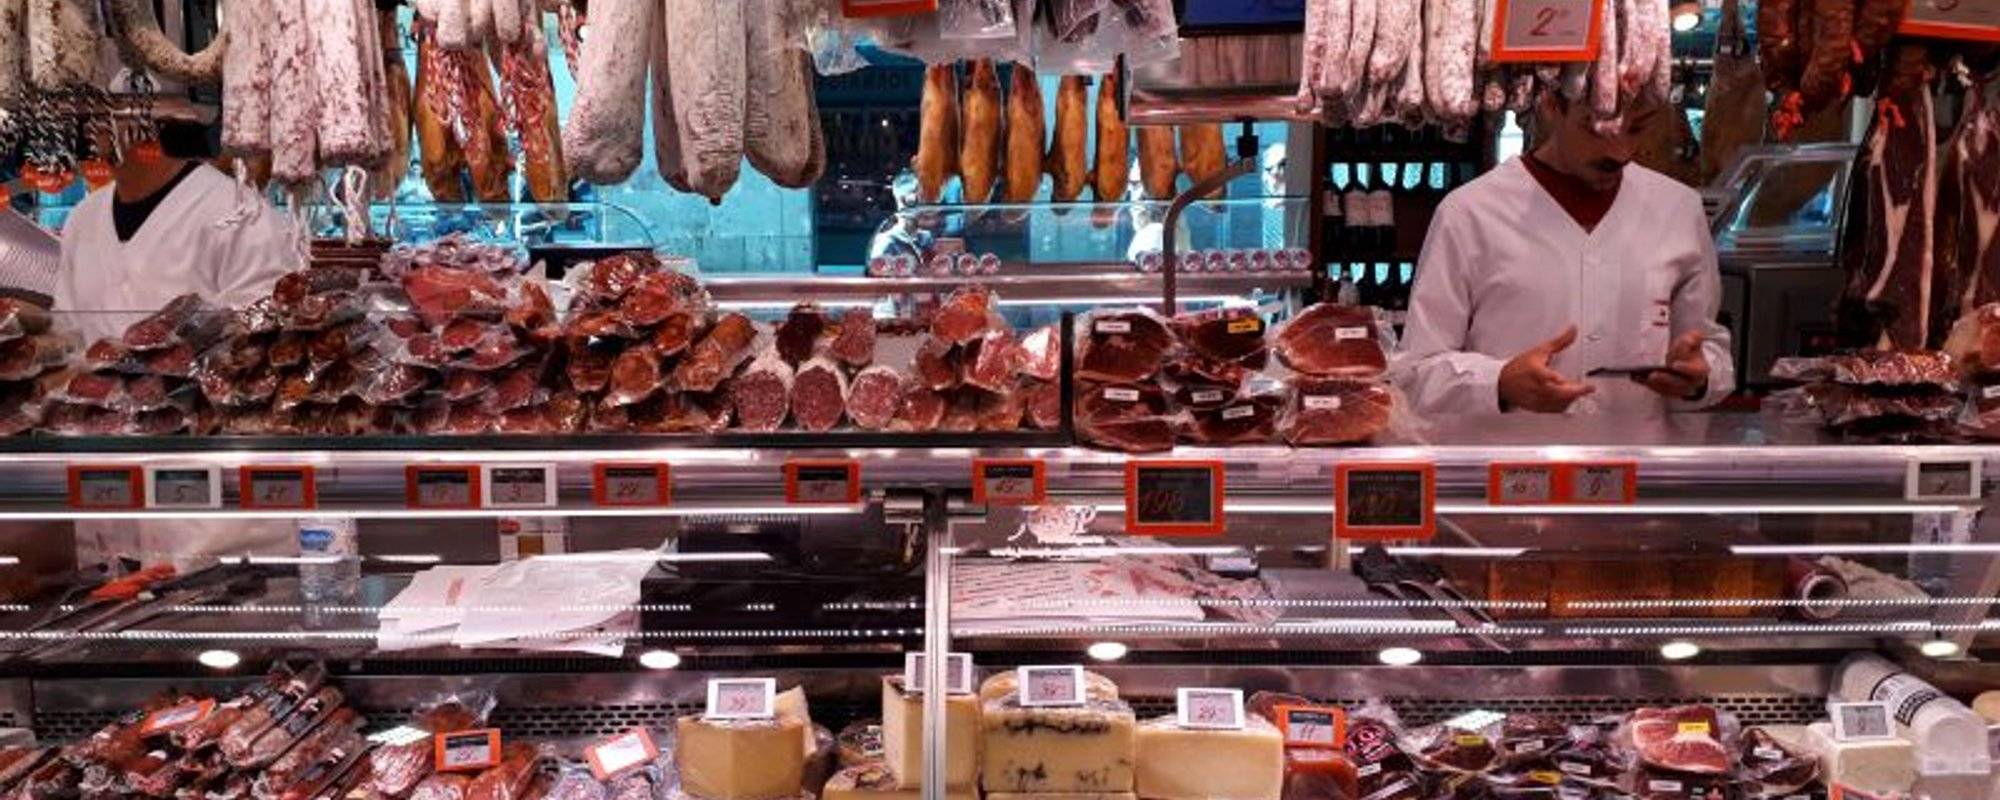 Travel Pro Places of Interest #144: Mercado Bocaria in Barcelona Spain! Part Four (10 photos)